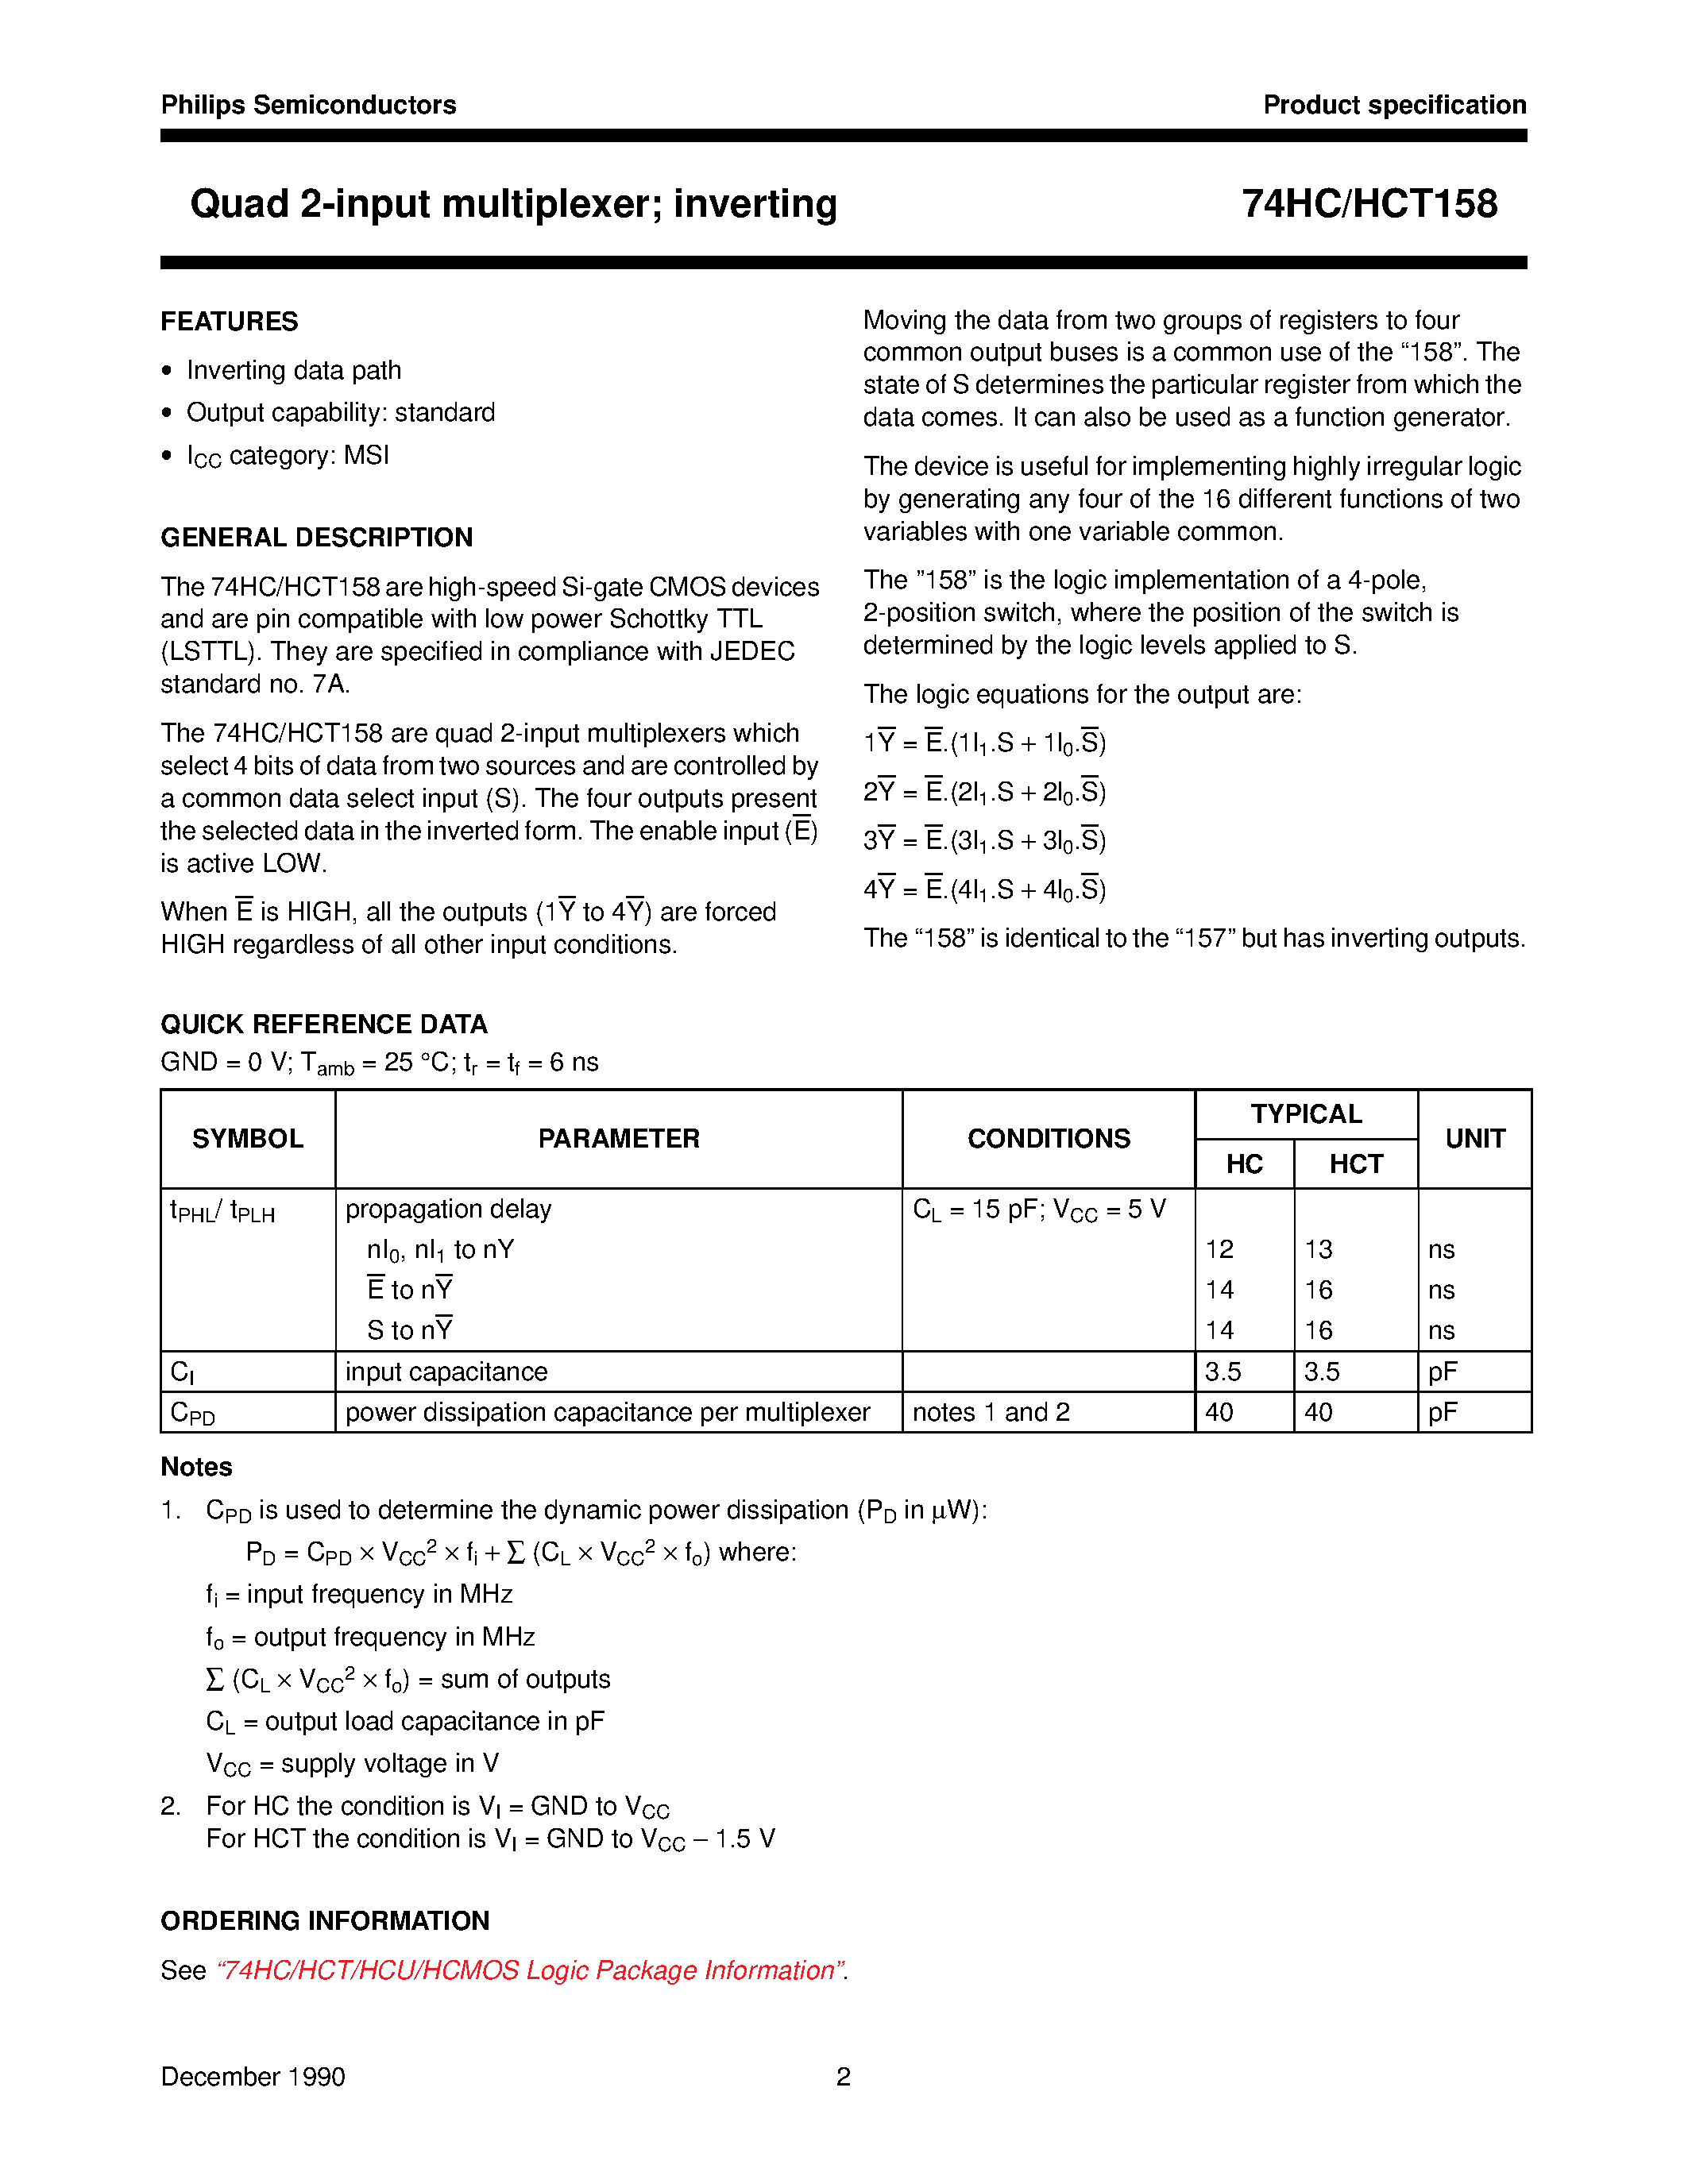 Datasheet 74HCT158 - Quad 2-input multiplexer inverting page 2